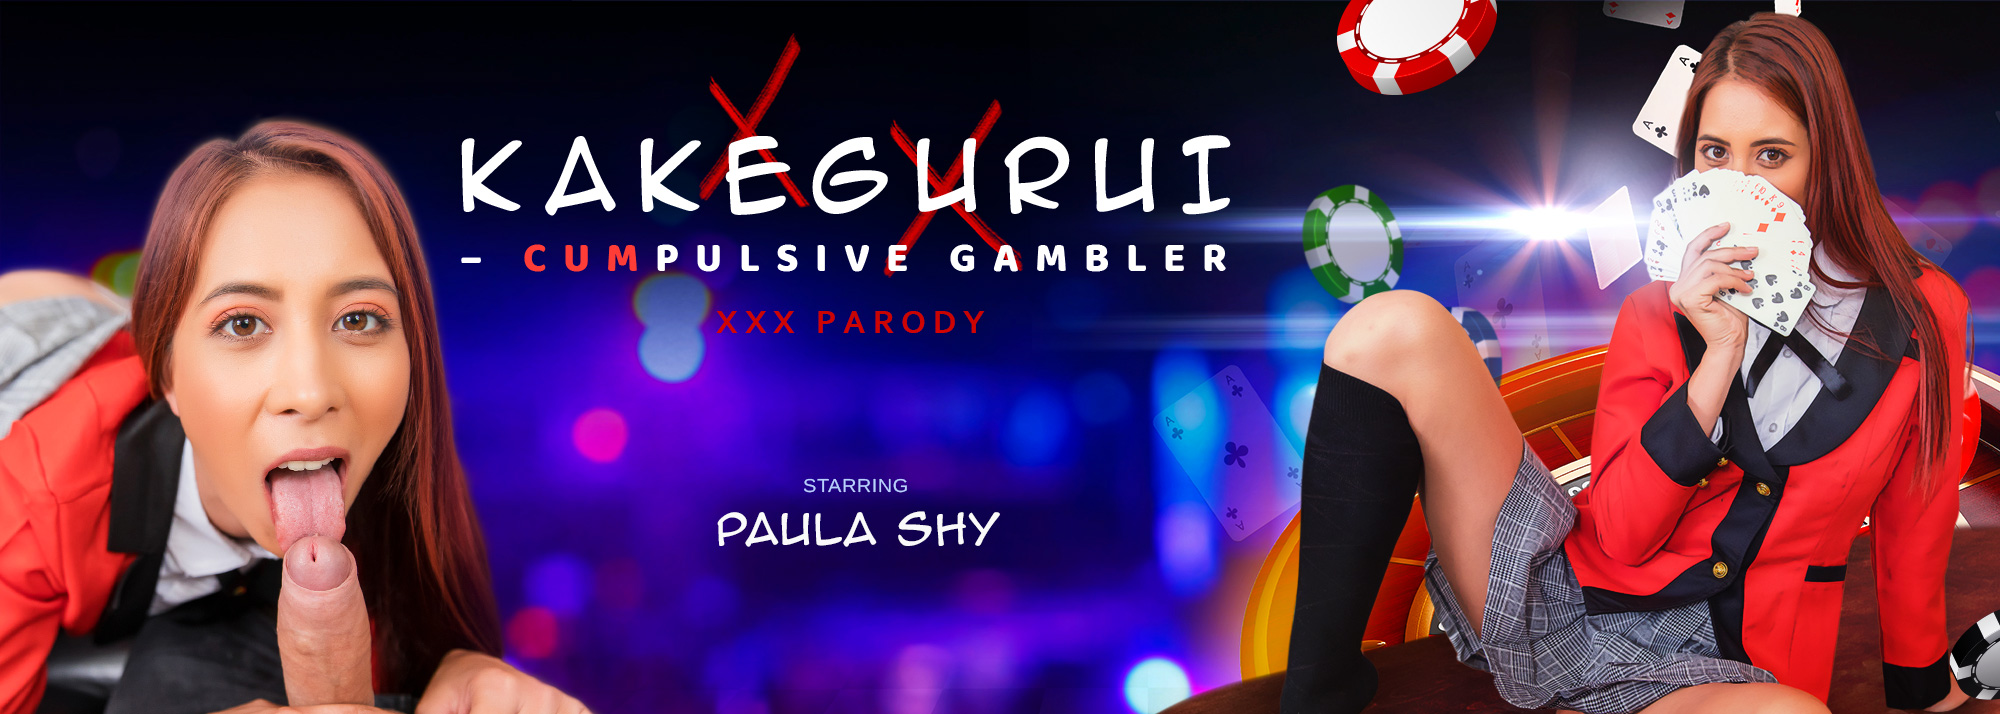 Kakegurui – CUMpulsive Gambler - VR Porn Video, Starring: Paula Shy